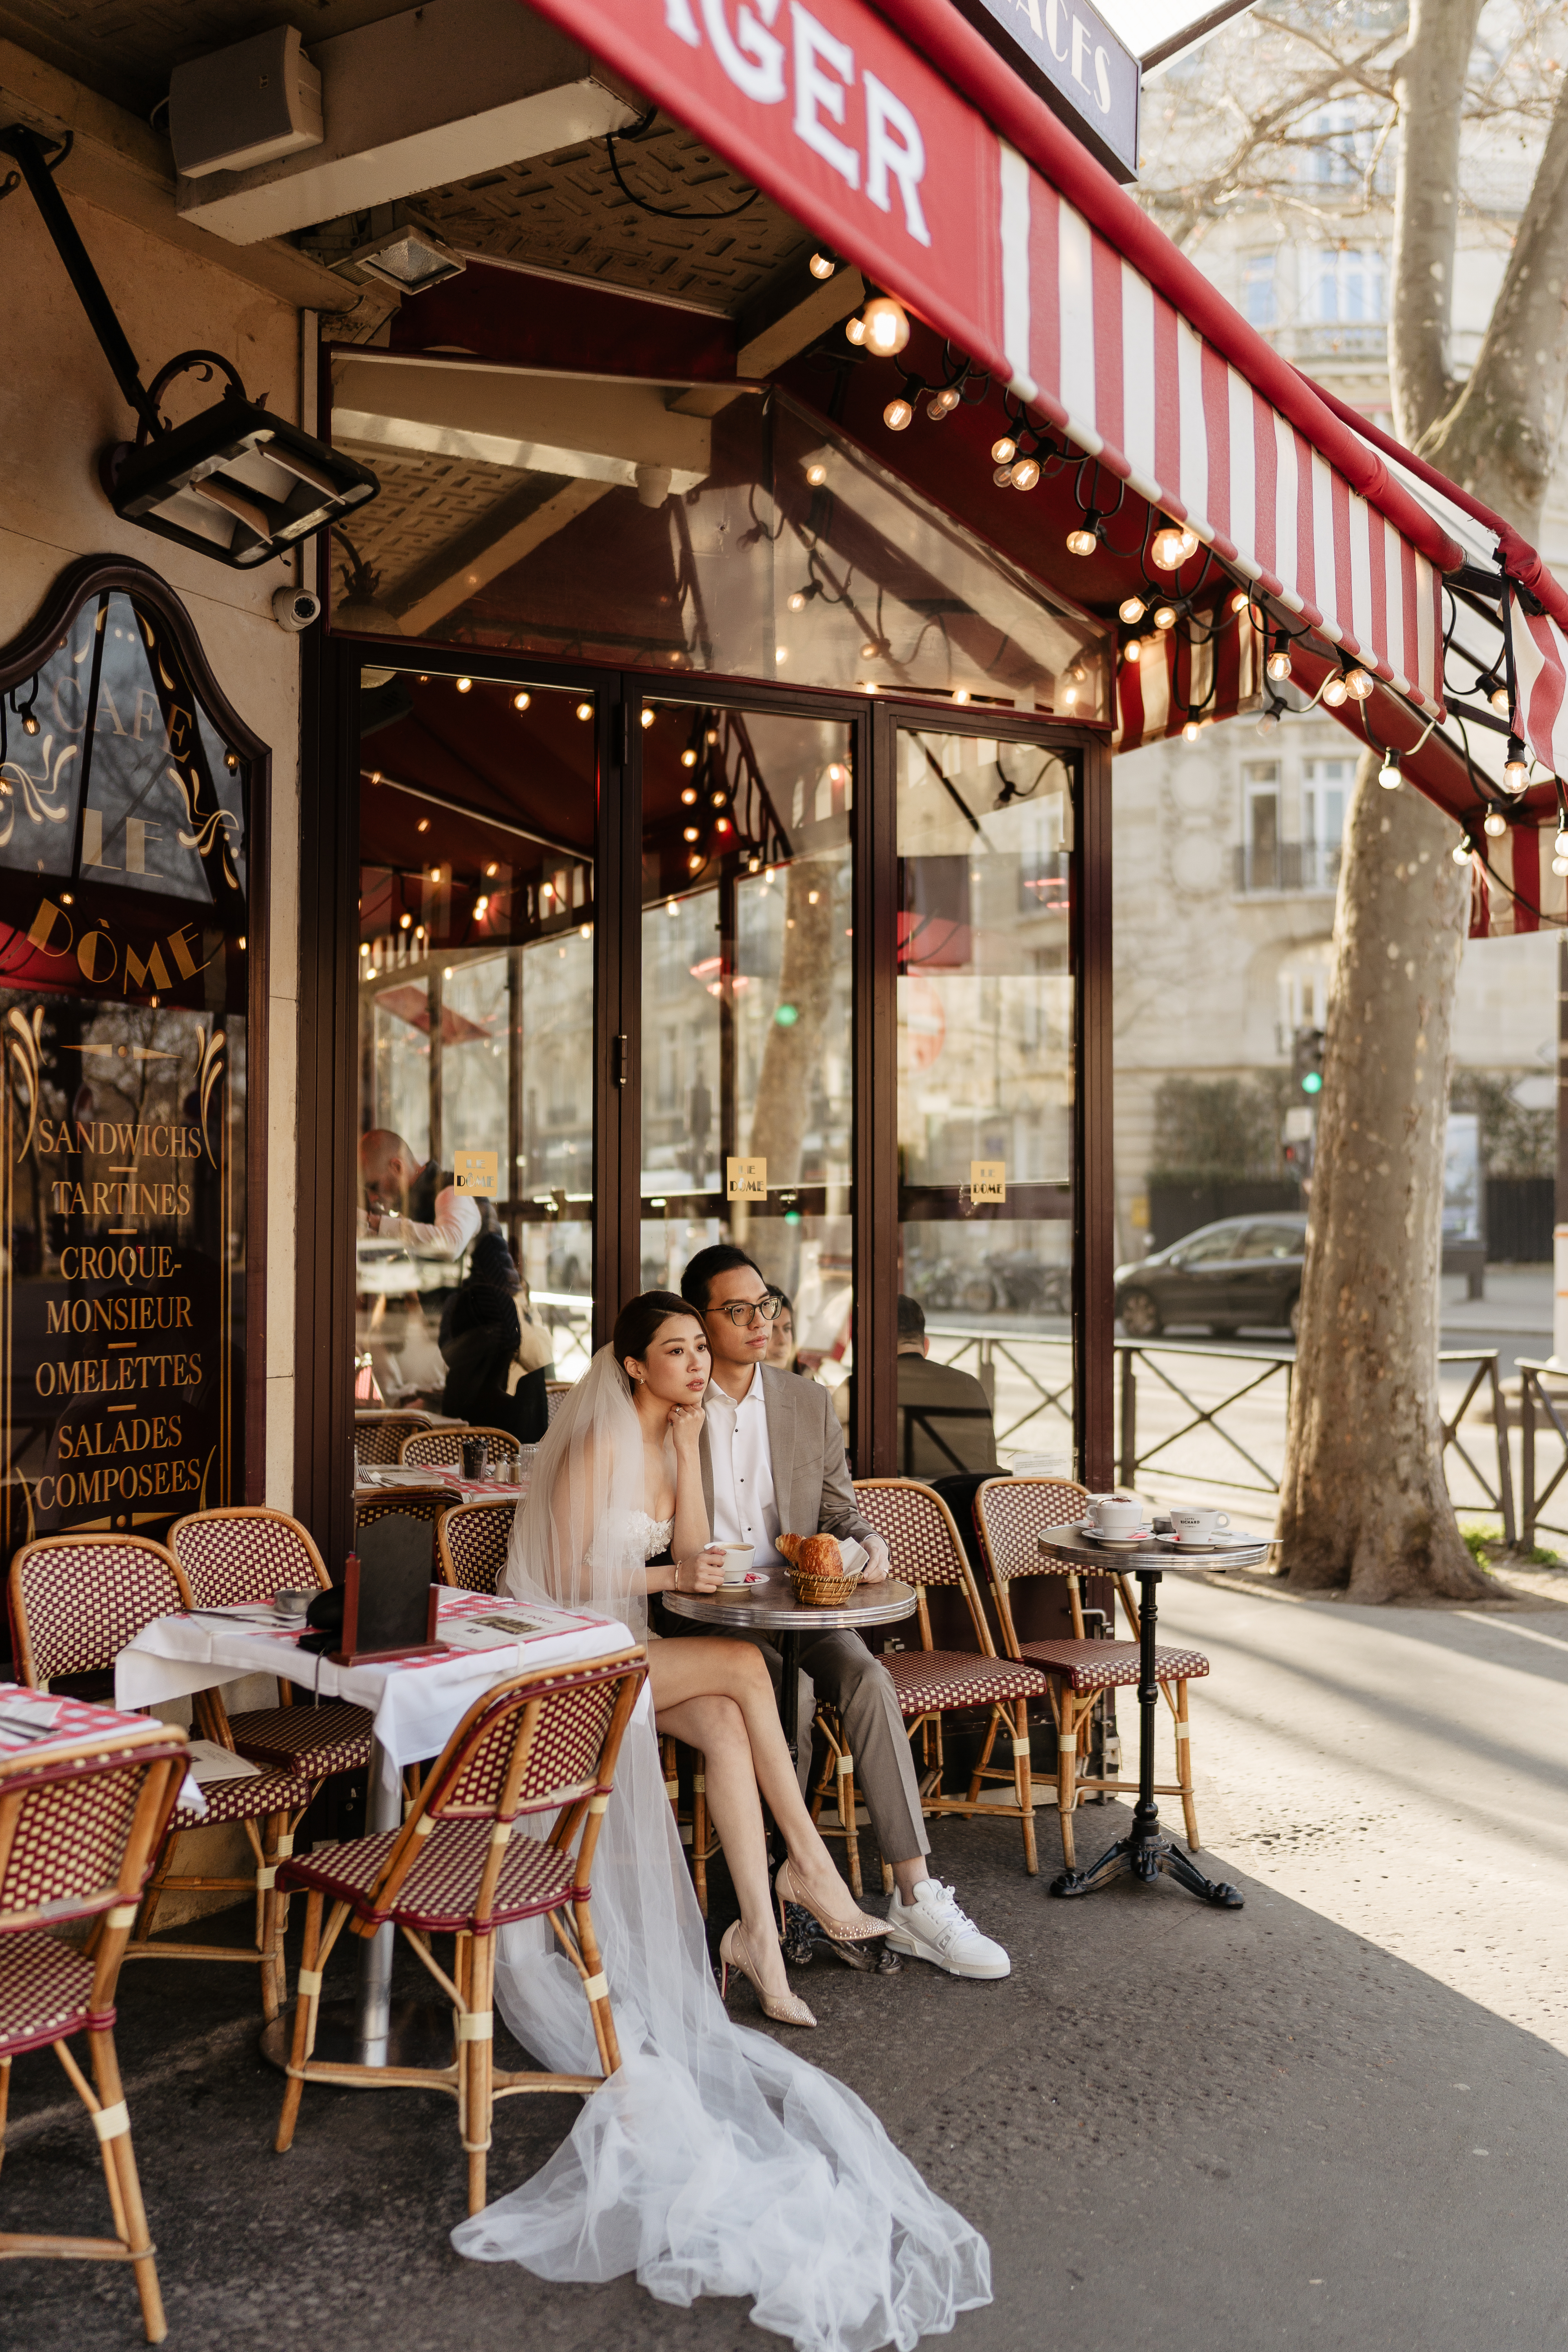 Couples wedding anniversary Photoshoot Paris cafe